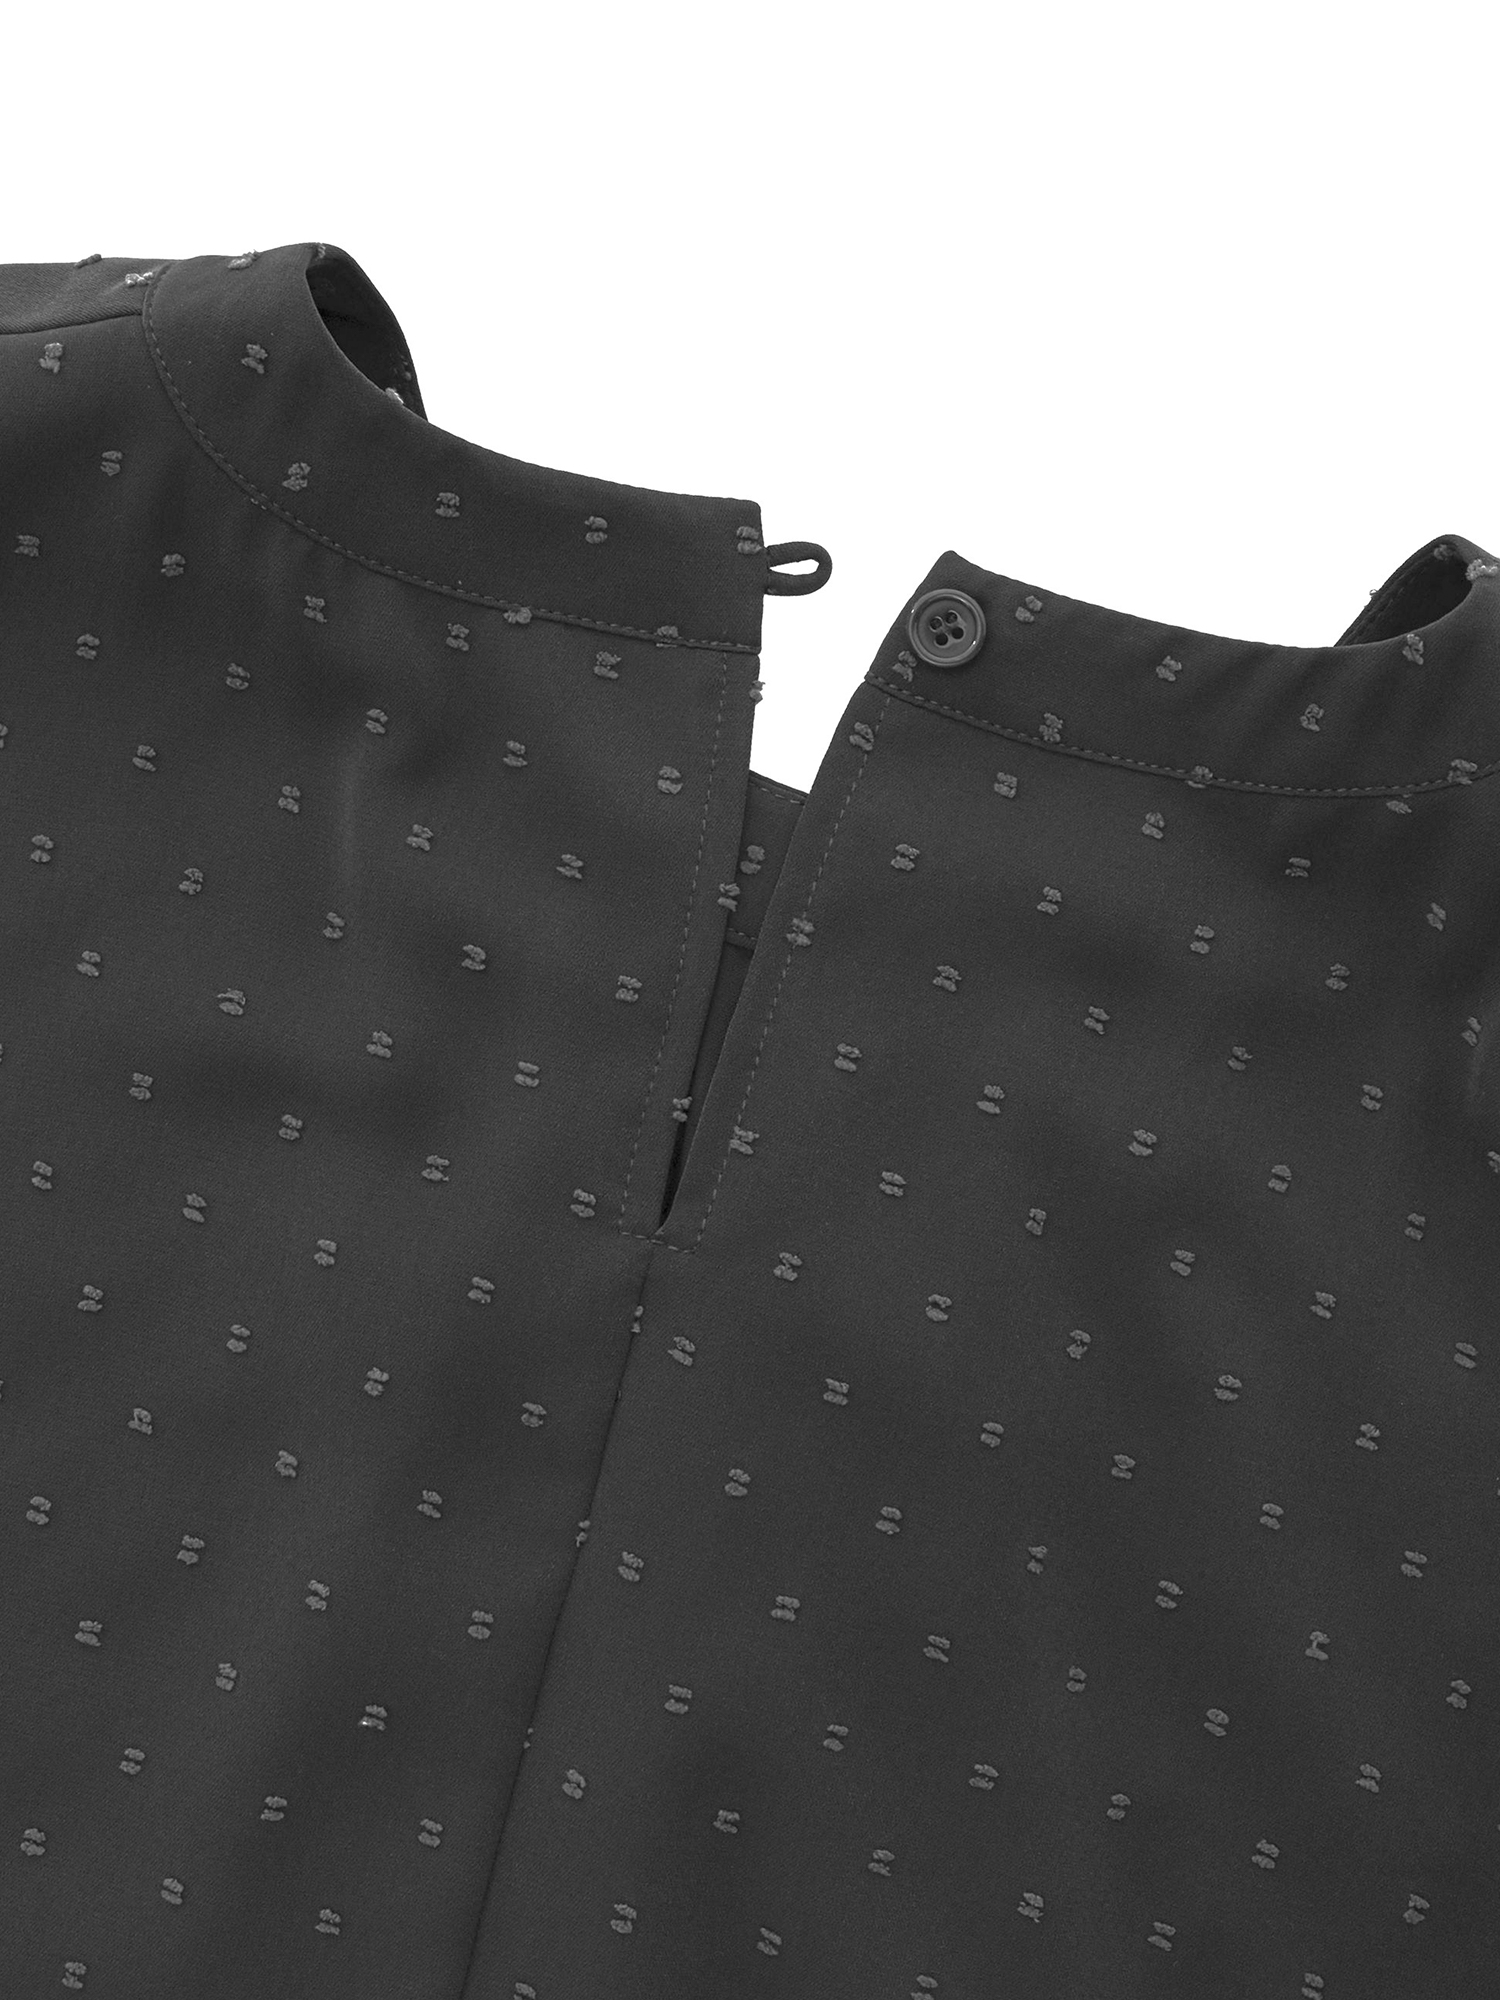 Amoretu Swiss Dot Tops for Womens Summer Crewneck Roll Up Short Sleeve Tunic Shirts Casual Work Office Blouse Shirt Black XL - image 4 of 5